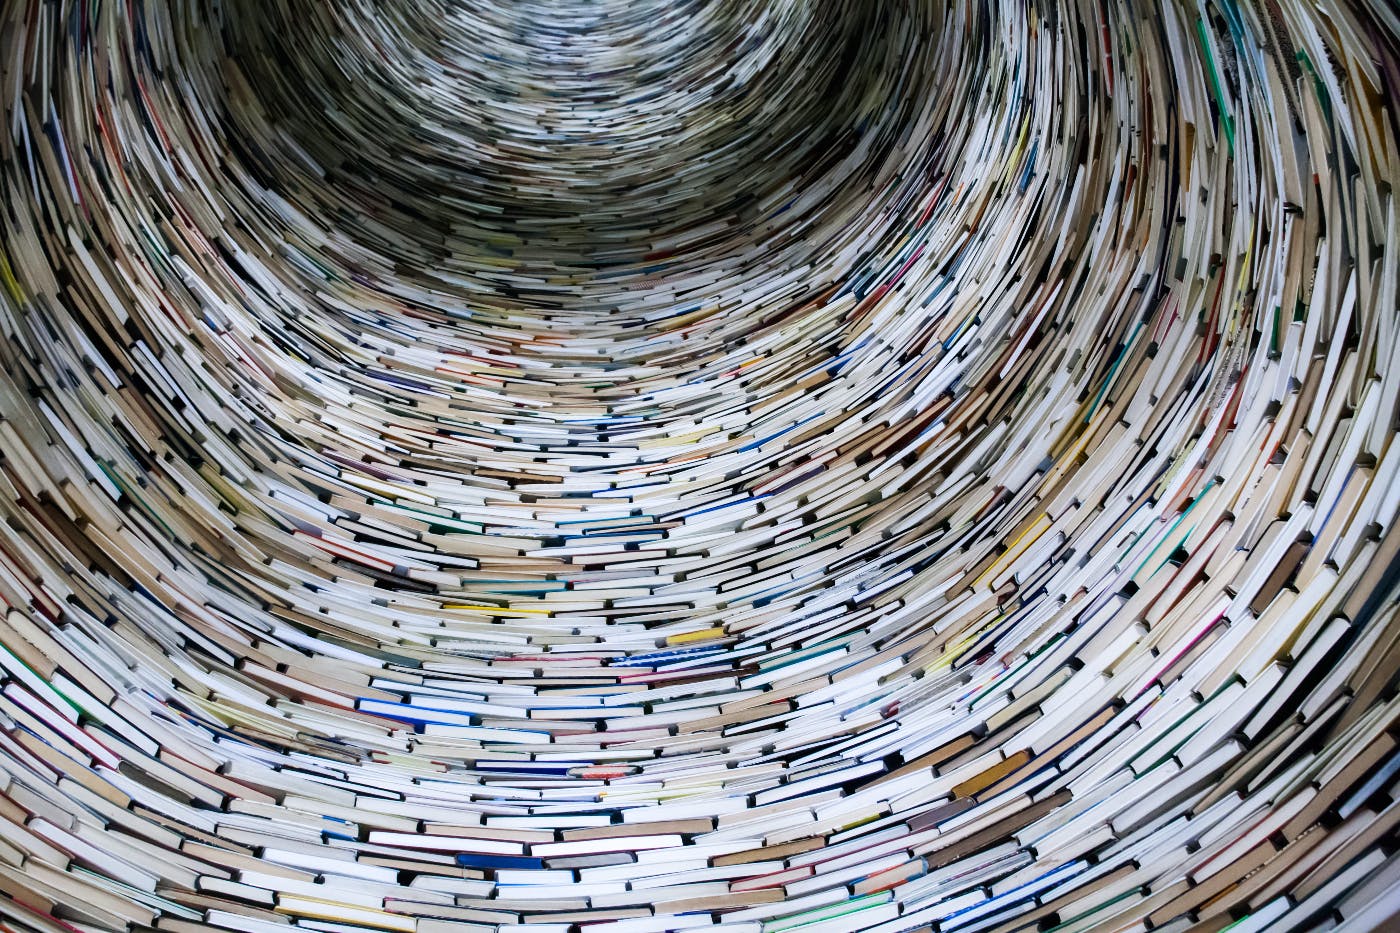 a vortex of books